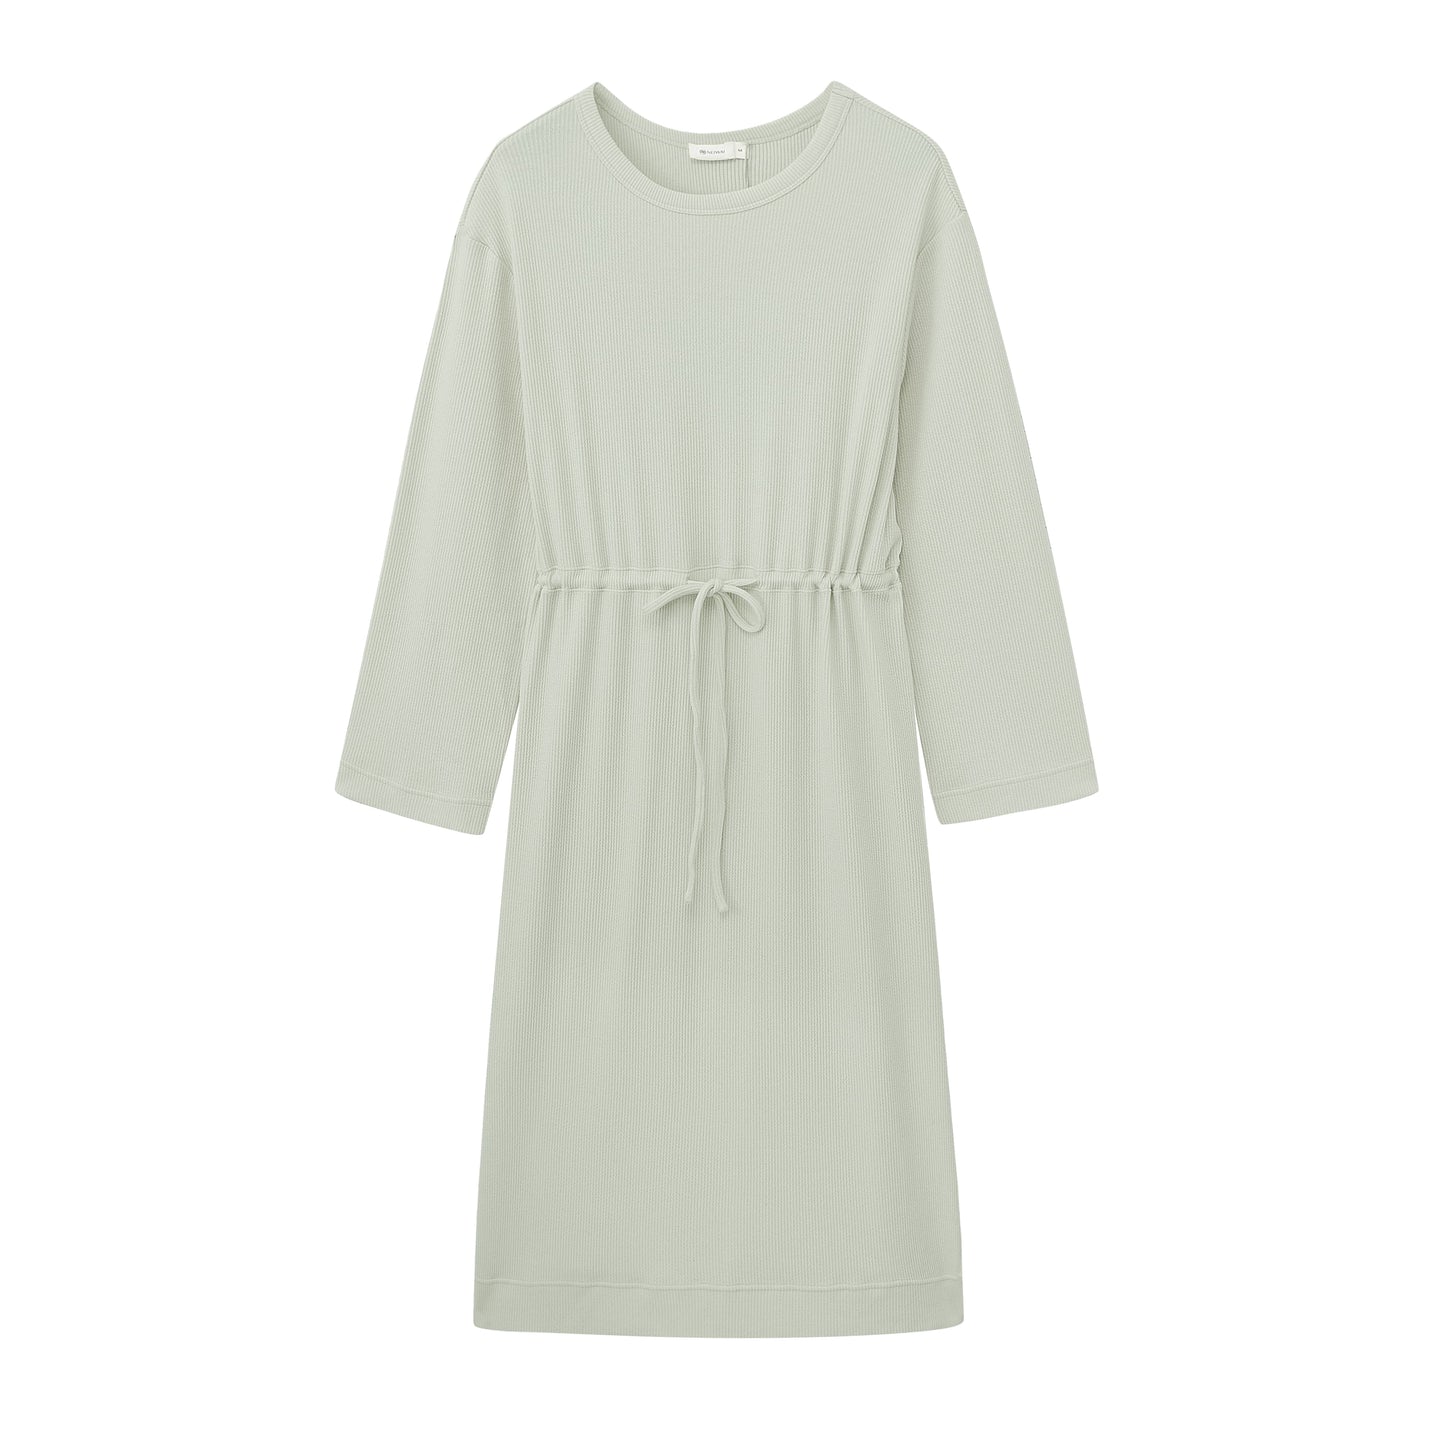 flay lay image of the long sleeve mint pajama dress with waist drawstring